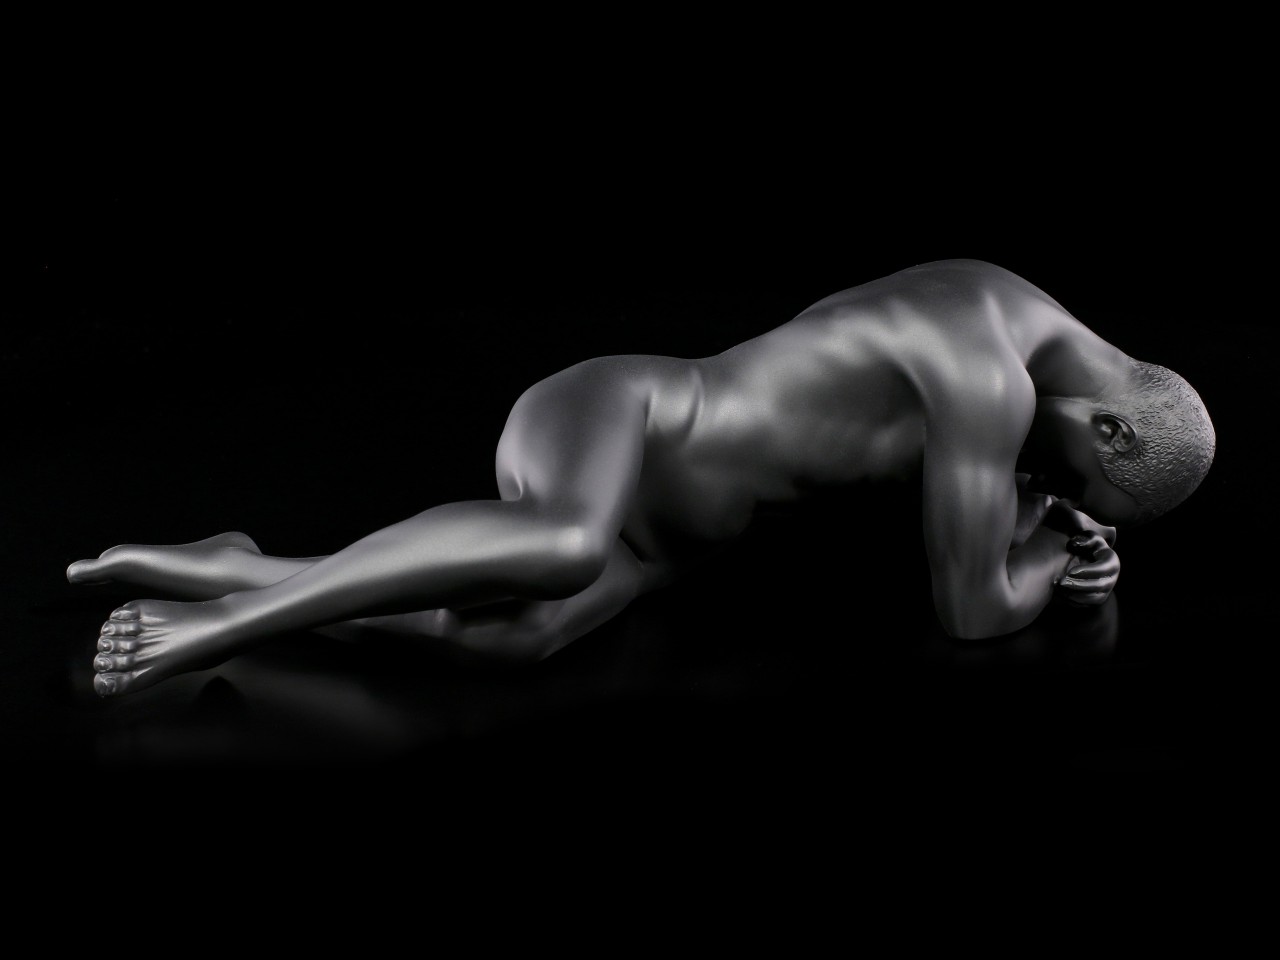 Male Nude Figurine - Lying on the Ground - black